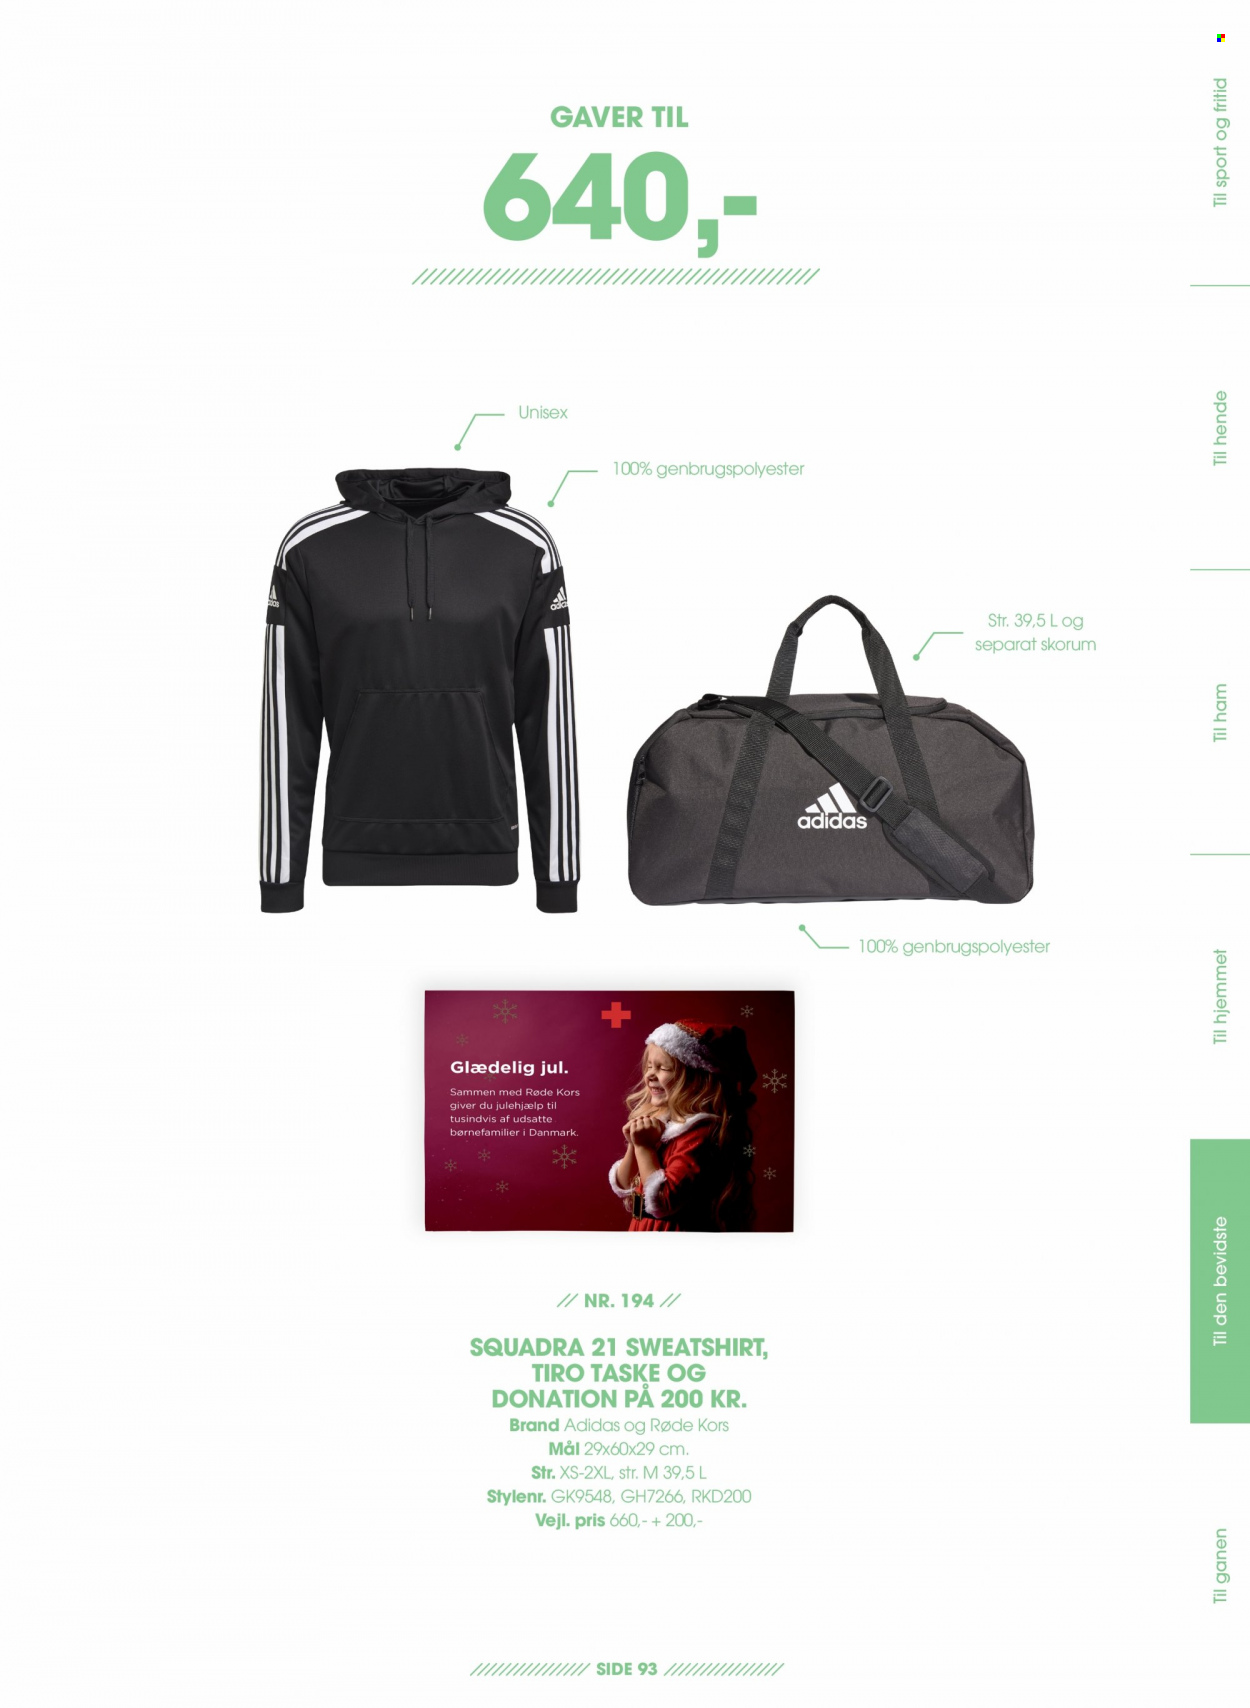 thumbnail - Sportigan tilbud  - tilbudsprodukter - Adidas, sweatshirt, taske. Side 93.